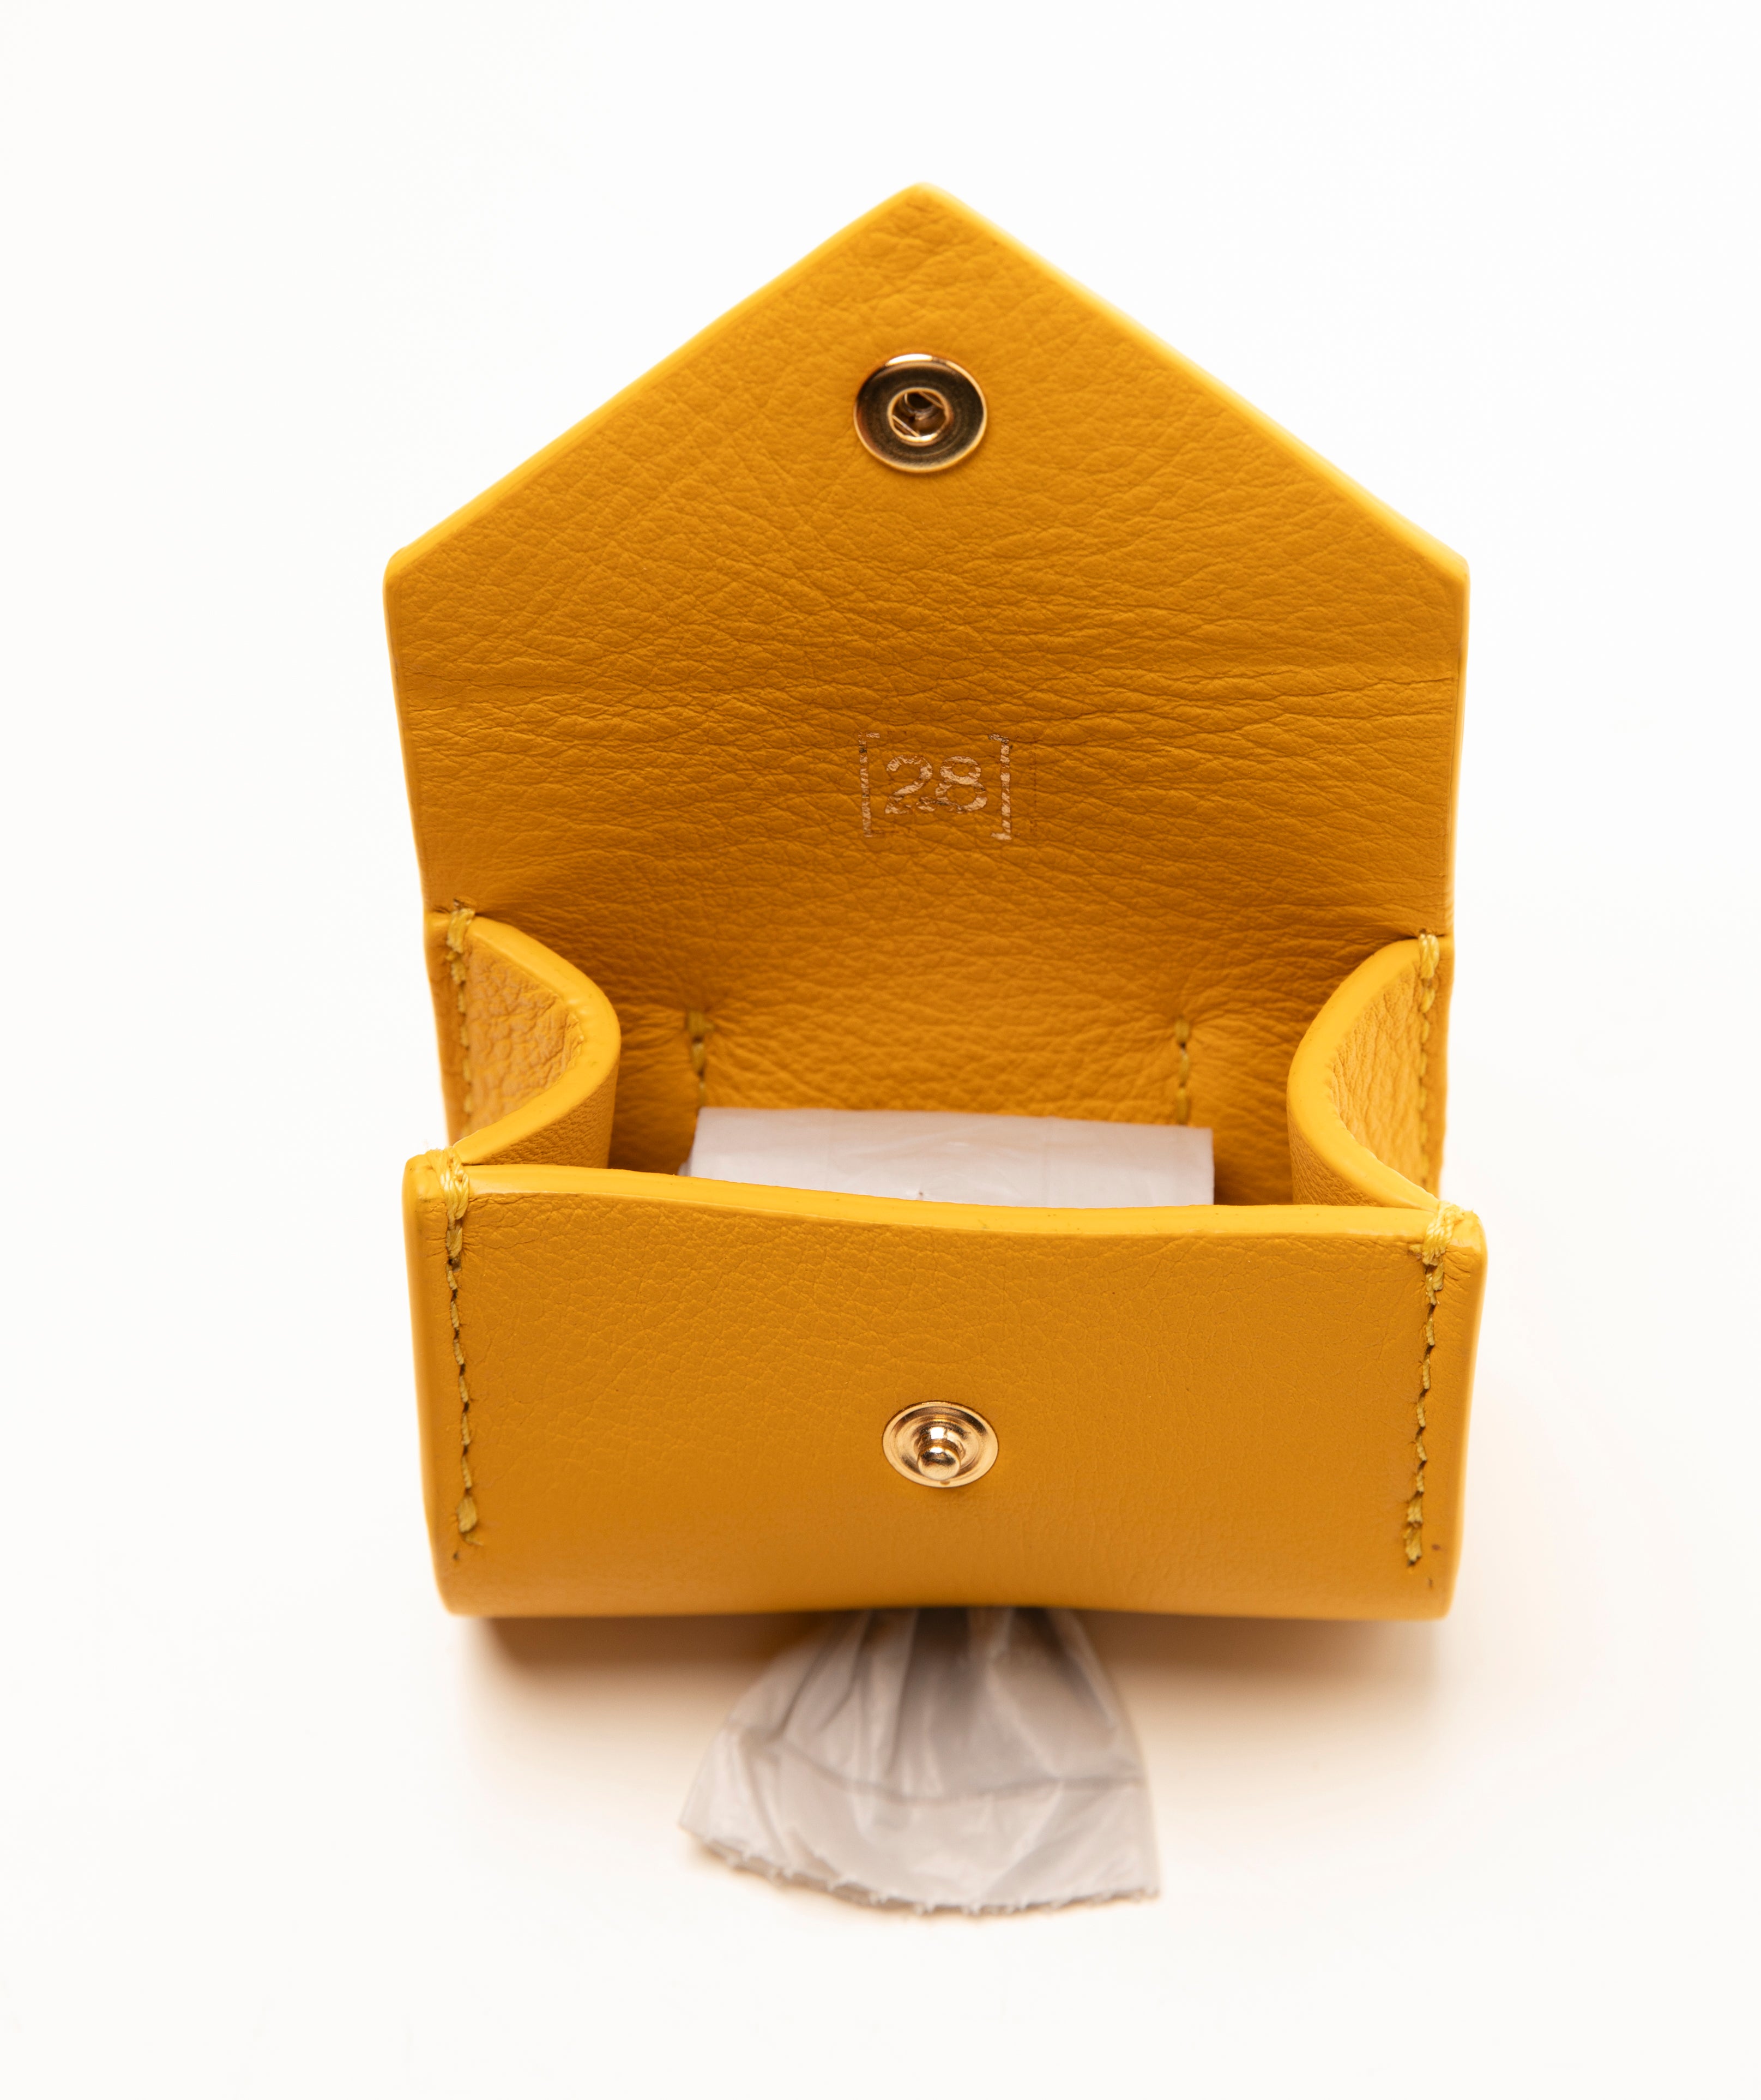 yellow-soft-leather-poop-bag-holder.jpg